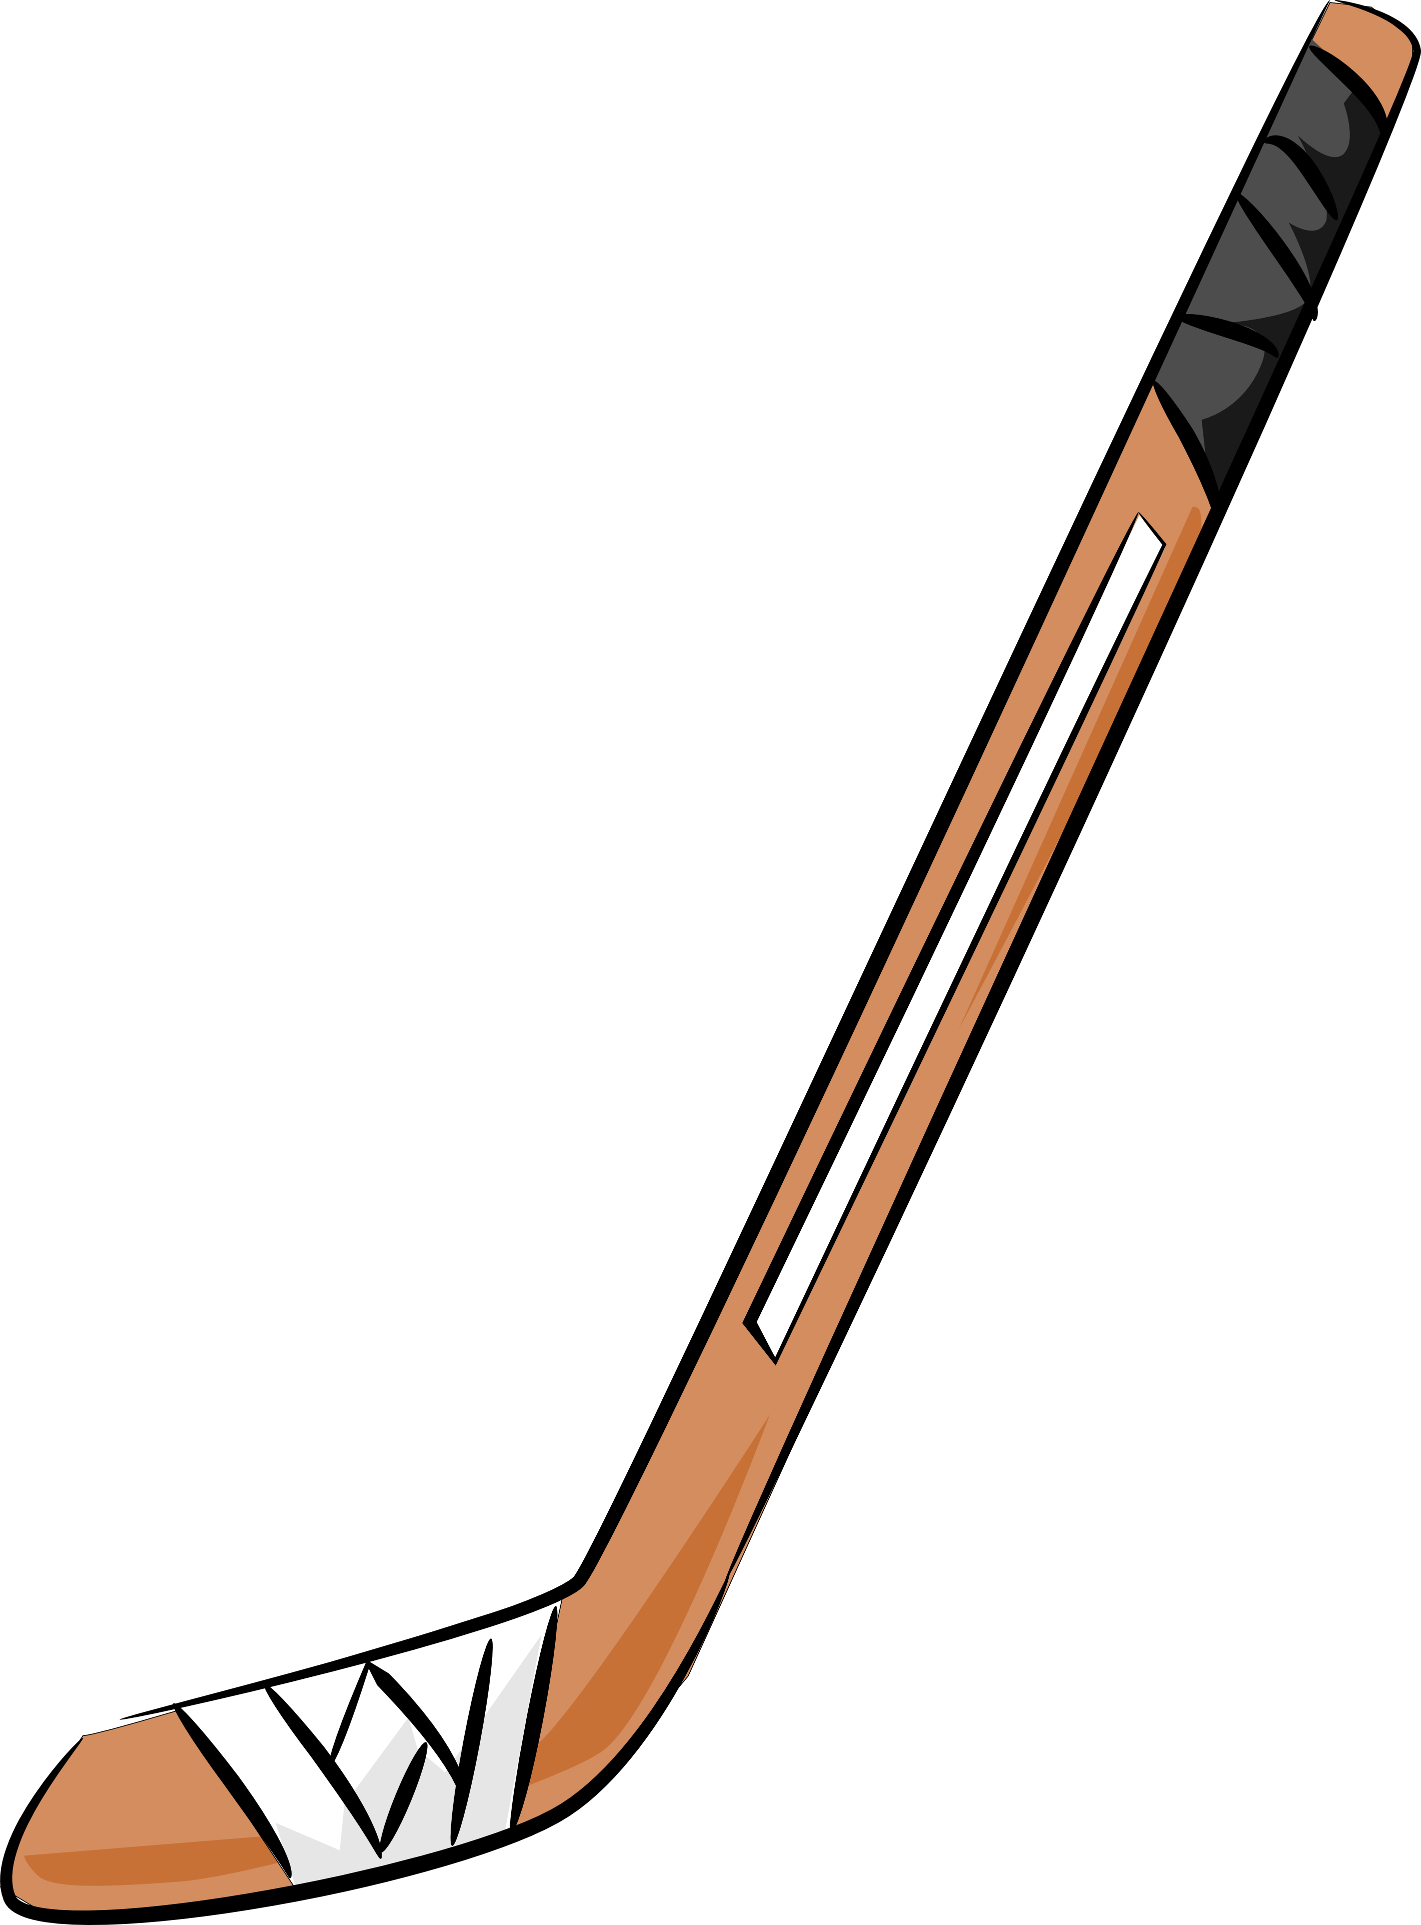 Fichier PNG de bâton de hockey